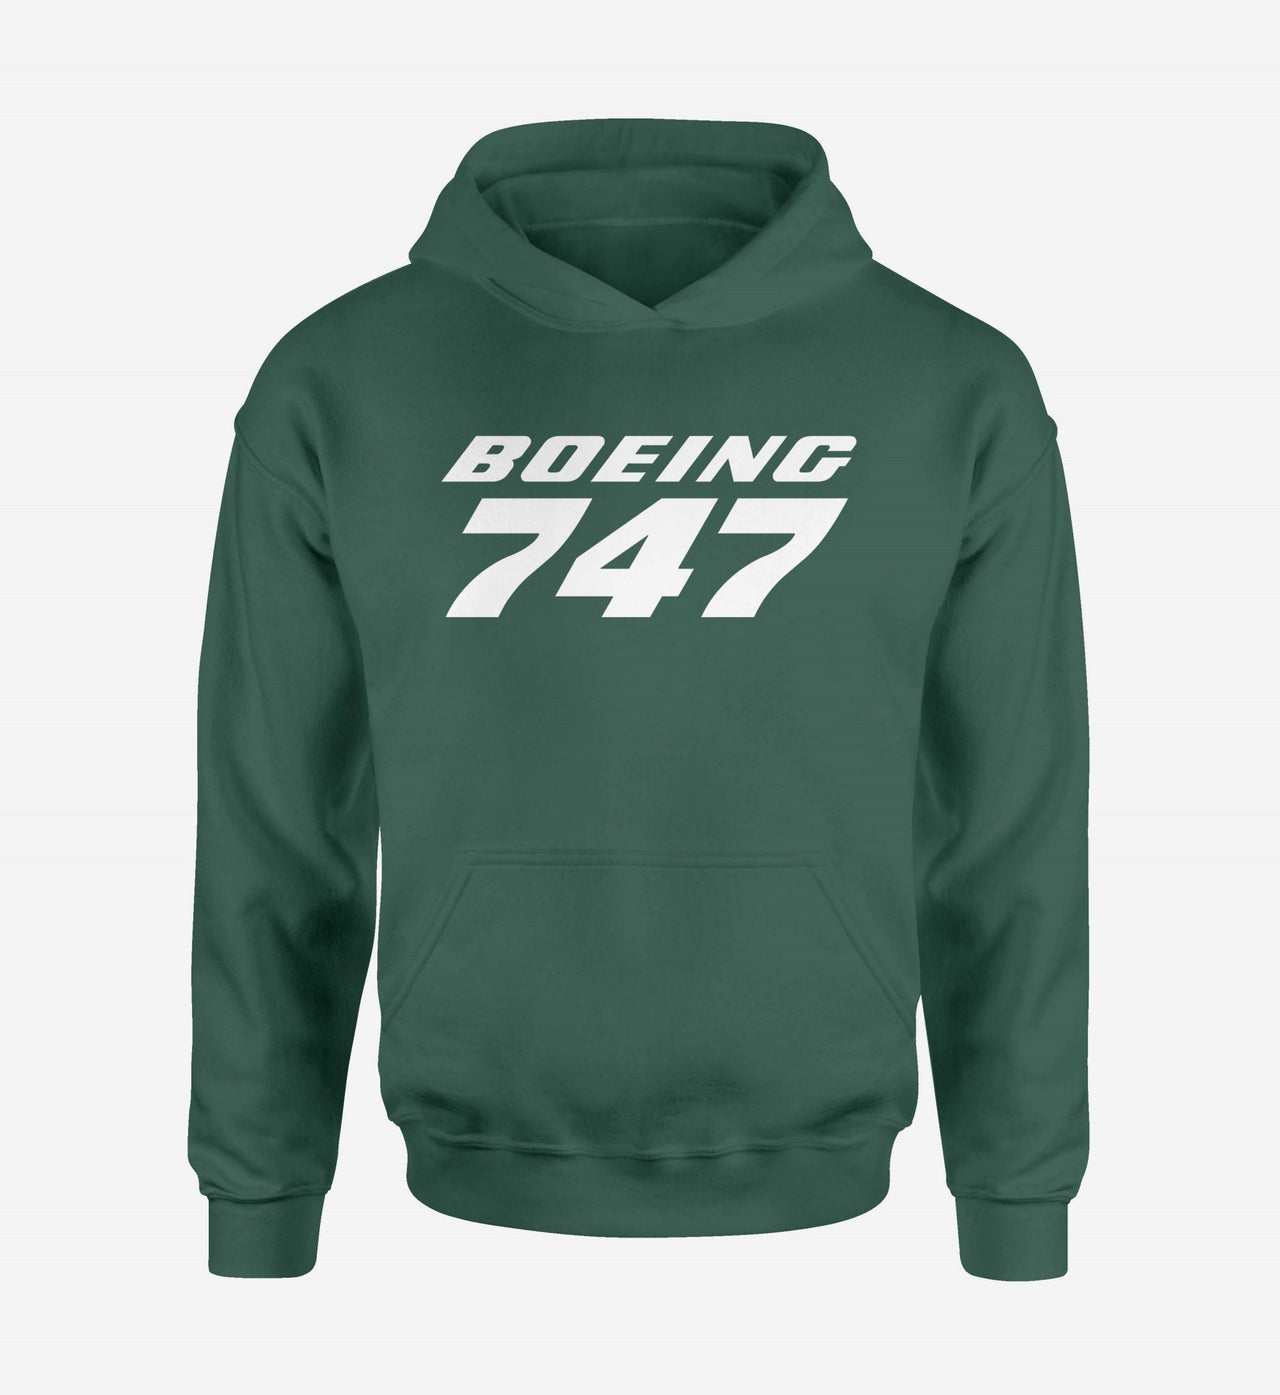 Boeing 747 & Text Designed Hoodies